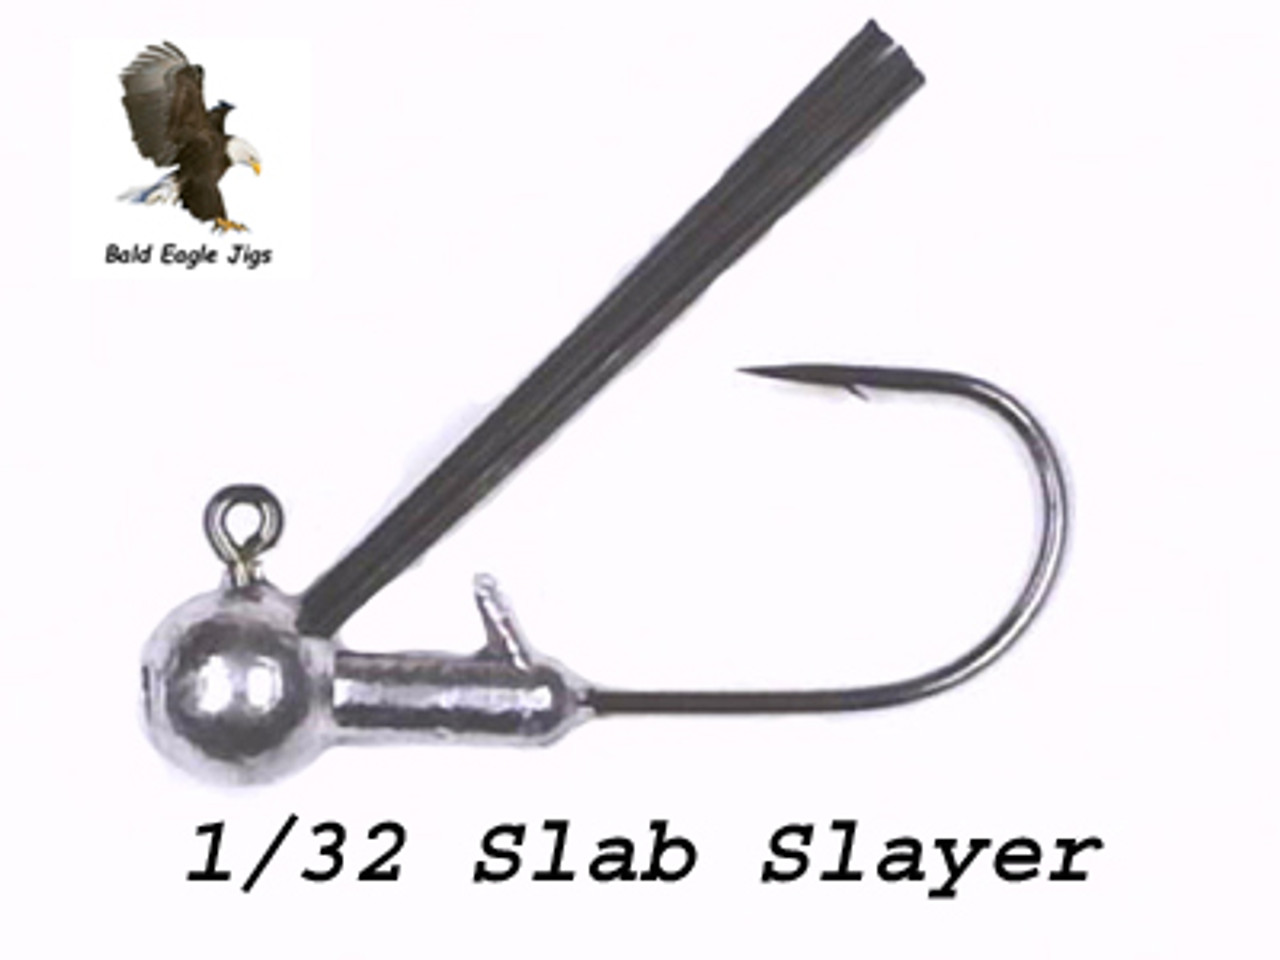 Slater's 648T-32-3 Crappie Jigs #6 Fishing Hook 1/32 oz. 3 Per